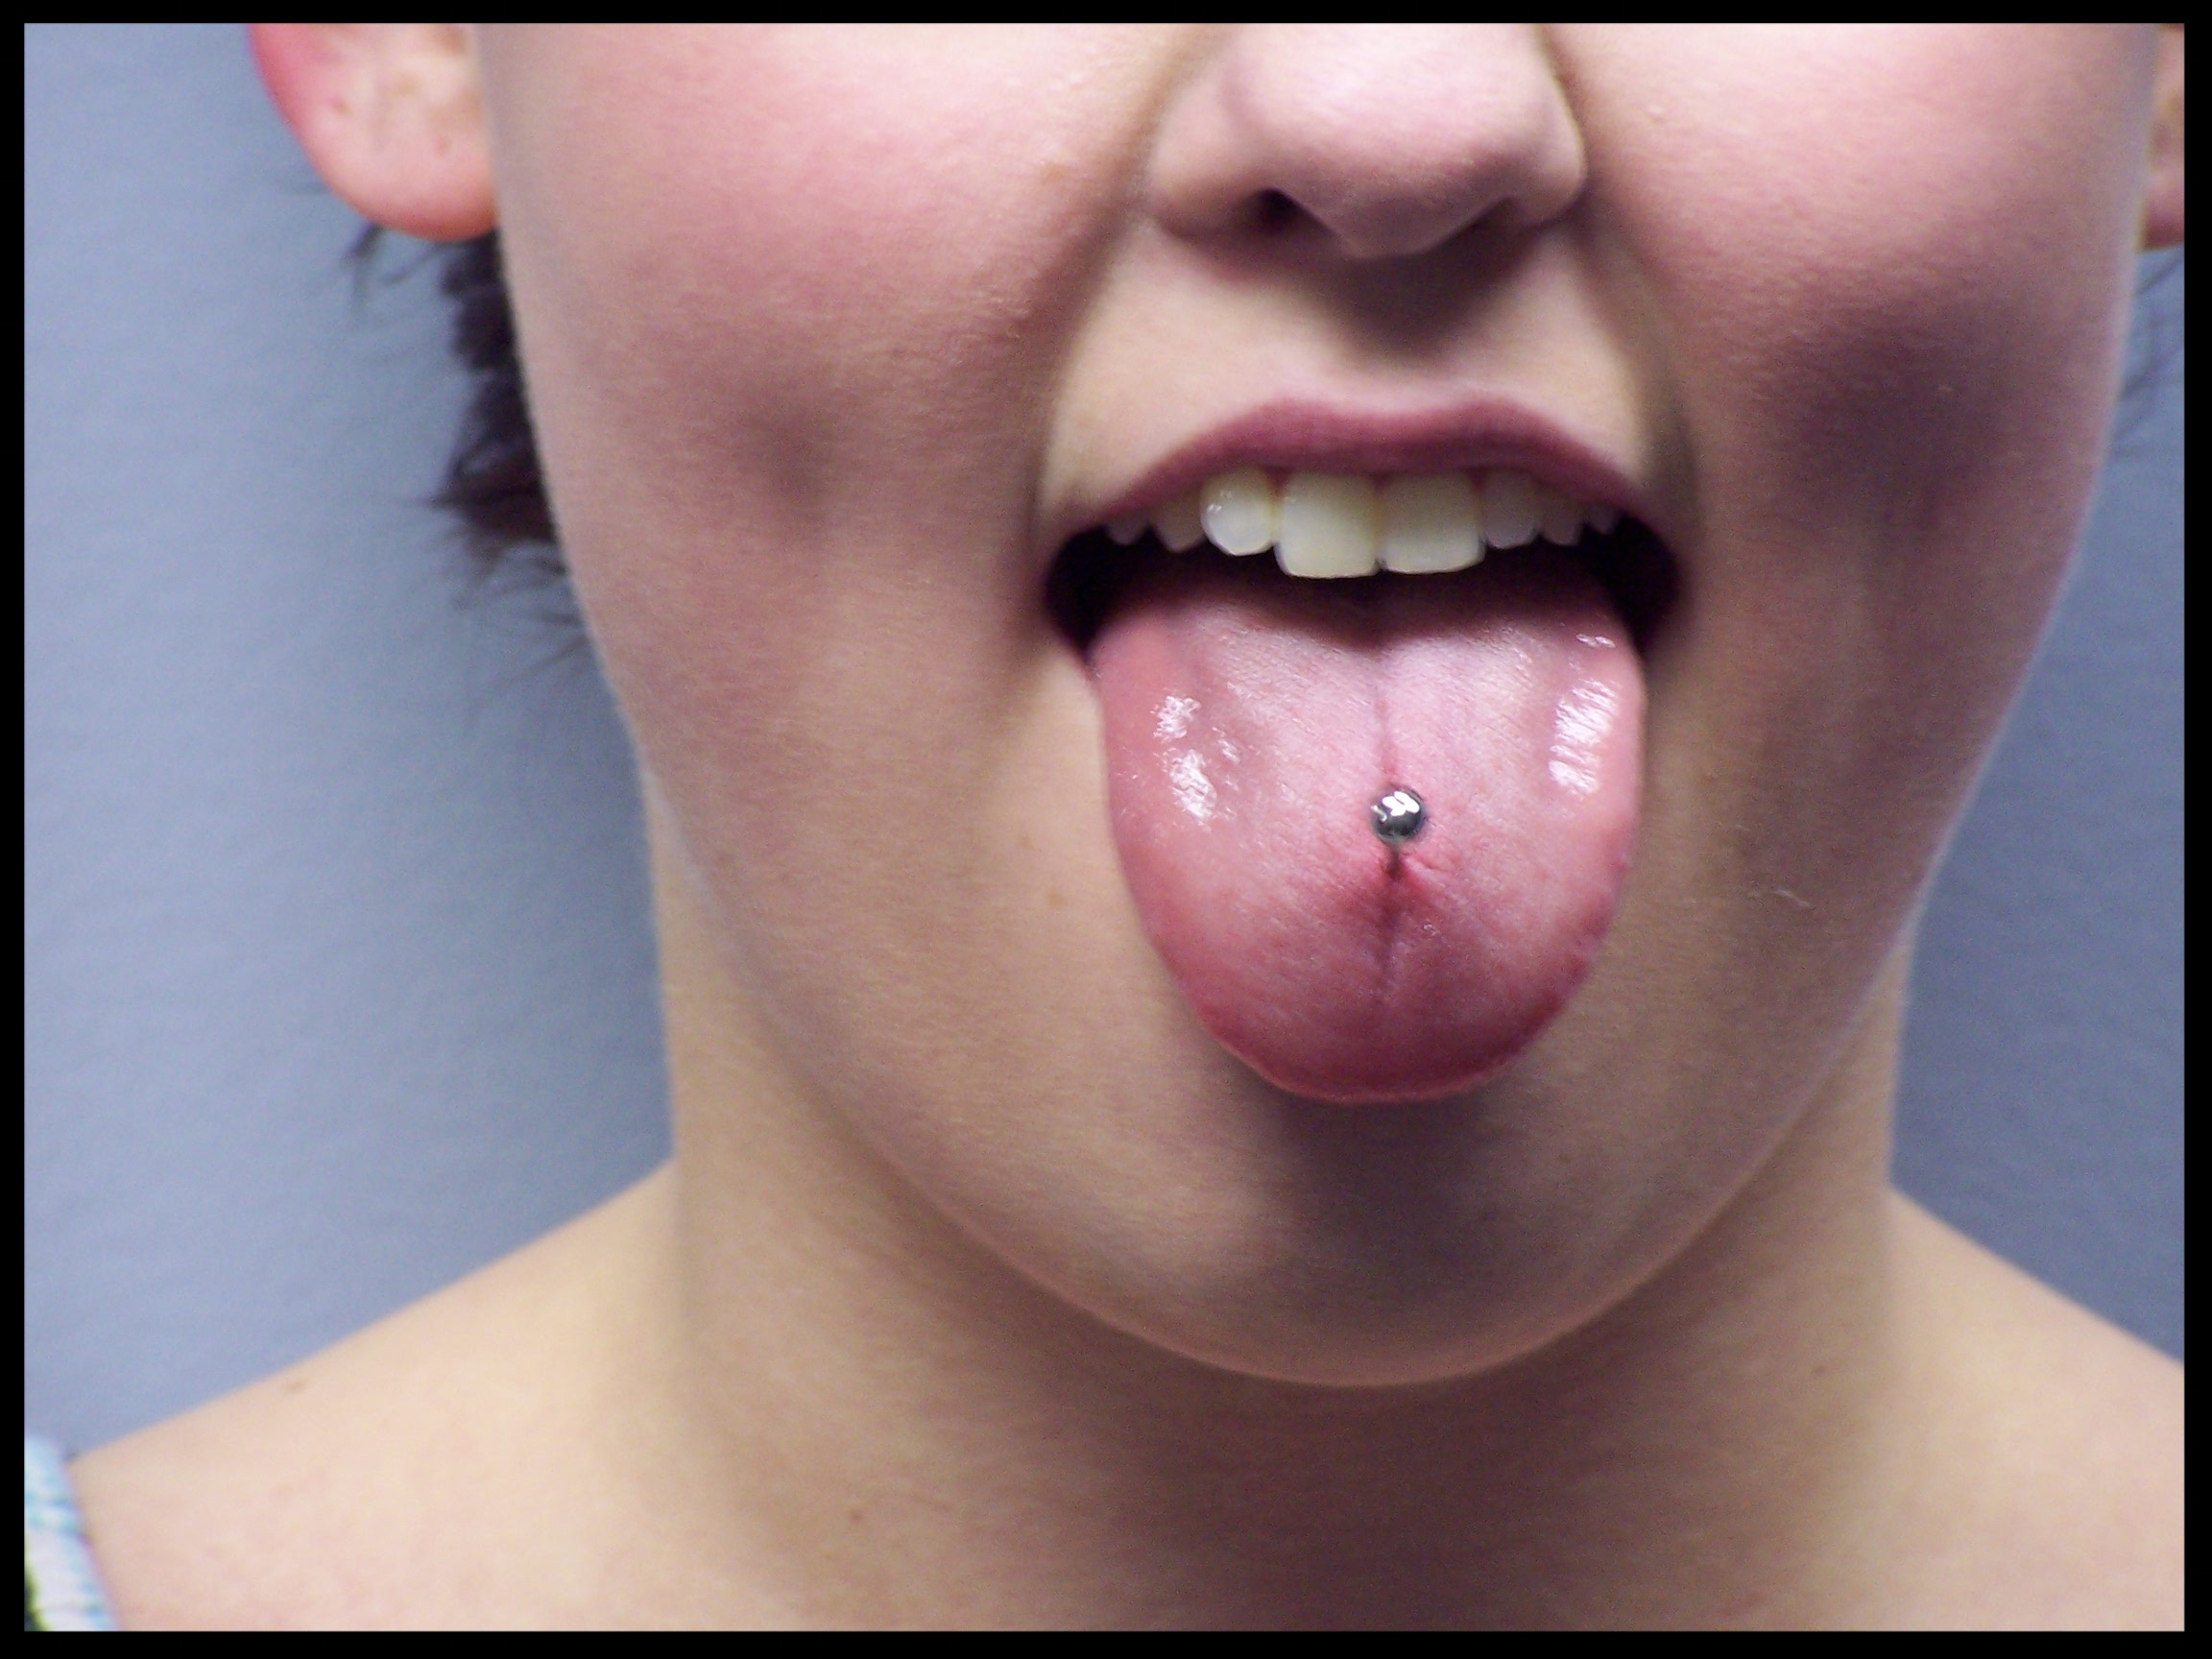 Mean a piercing does what tongue Dream Interpretation: